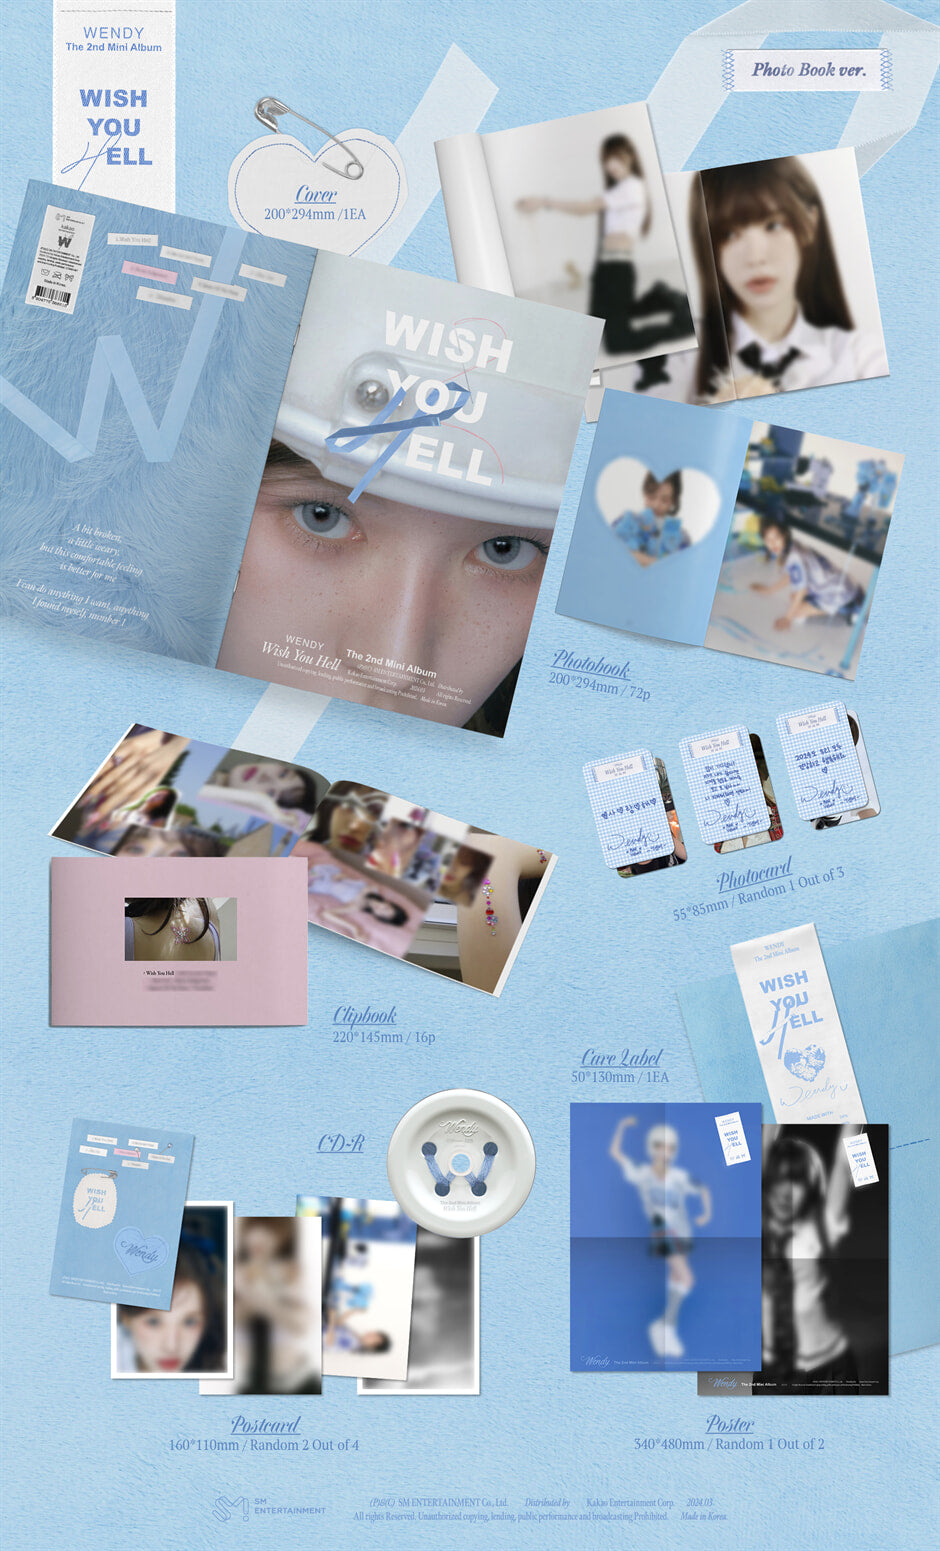 K-Pop CD Wendy - 2nd Mini Album 'Wish You Hell' [Photobook Ver.]